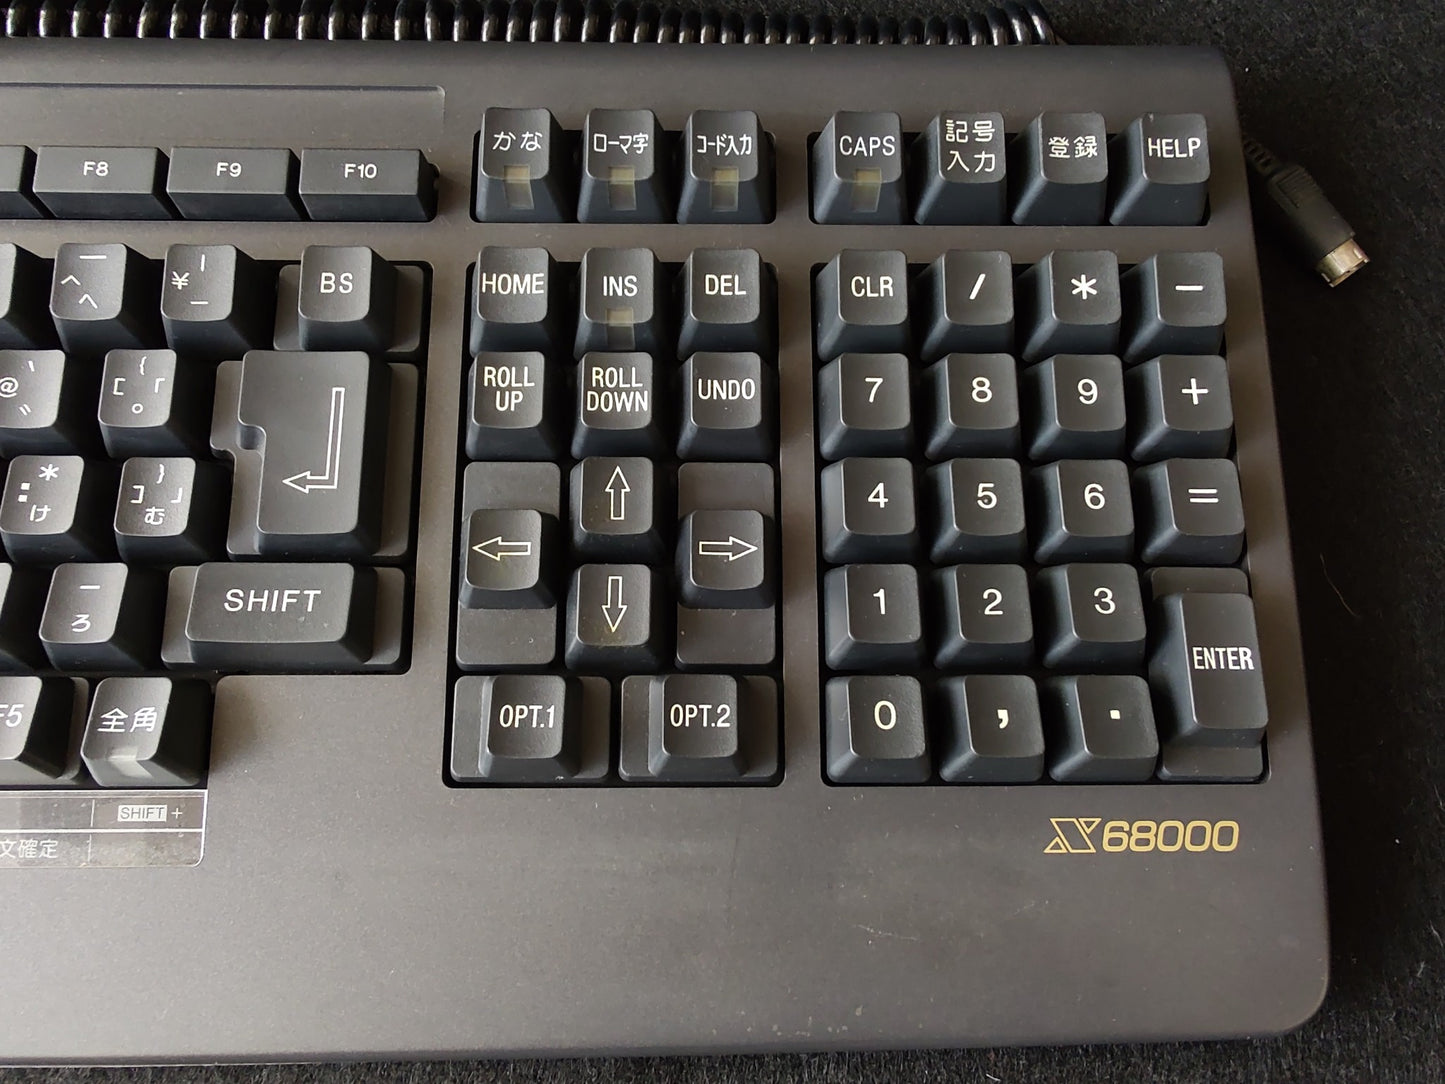 SHARP X68000 Original KEYBOARD DSETK0023CE03, Working-f0616-